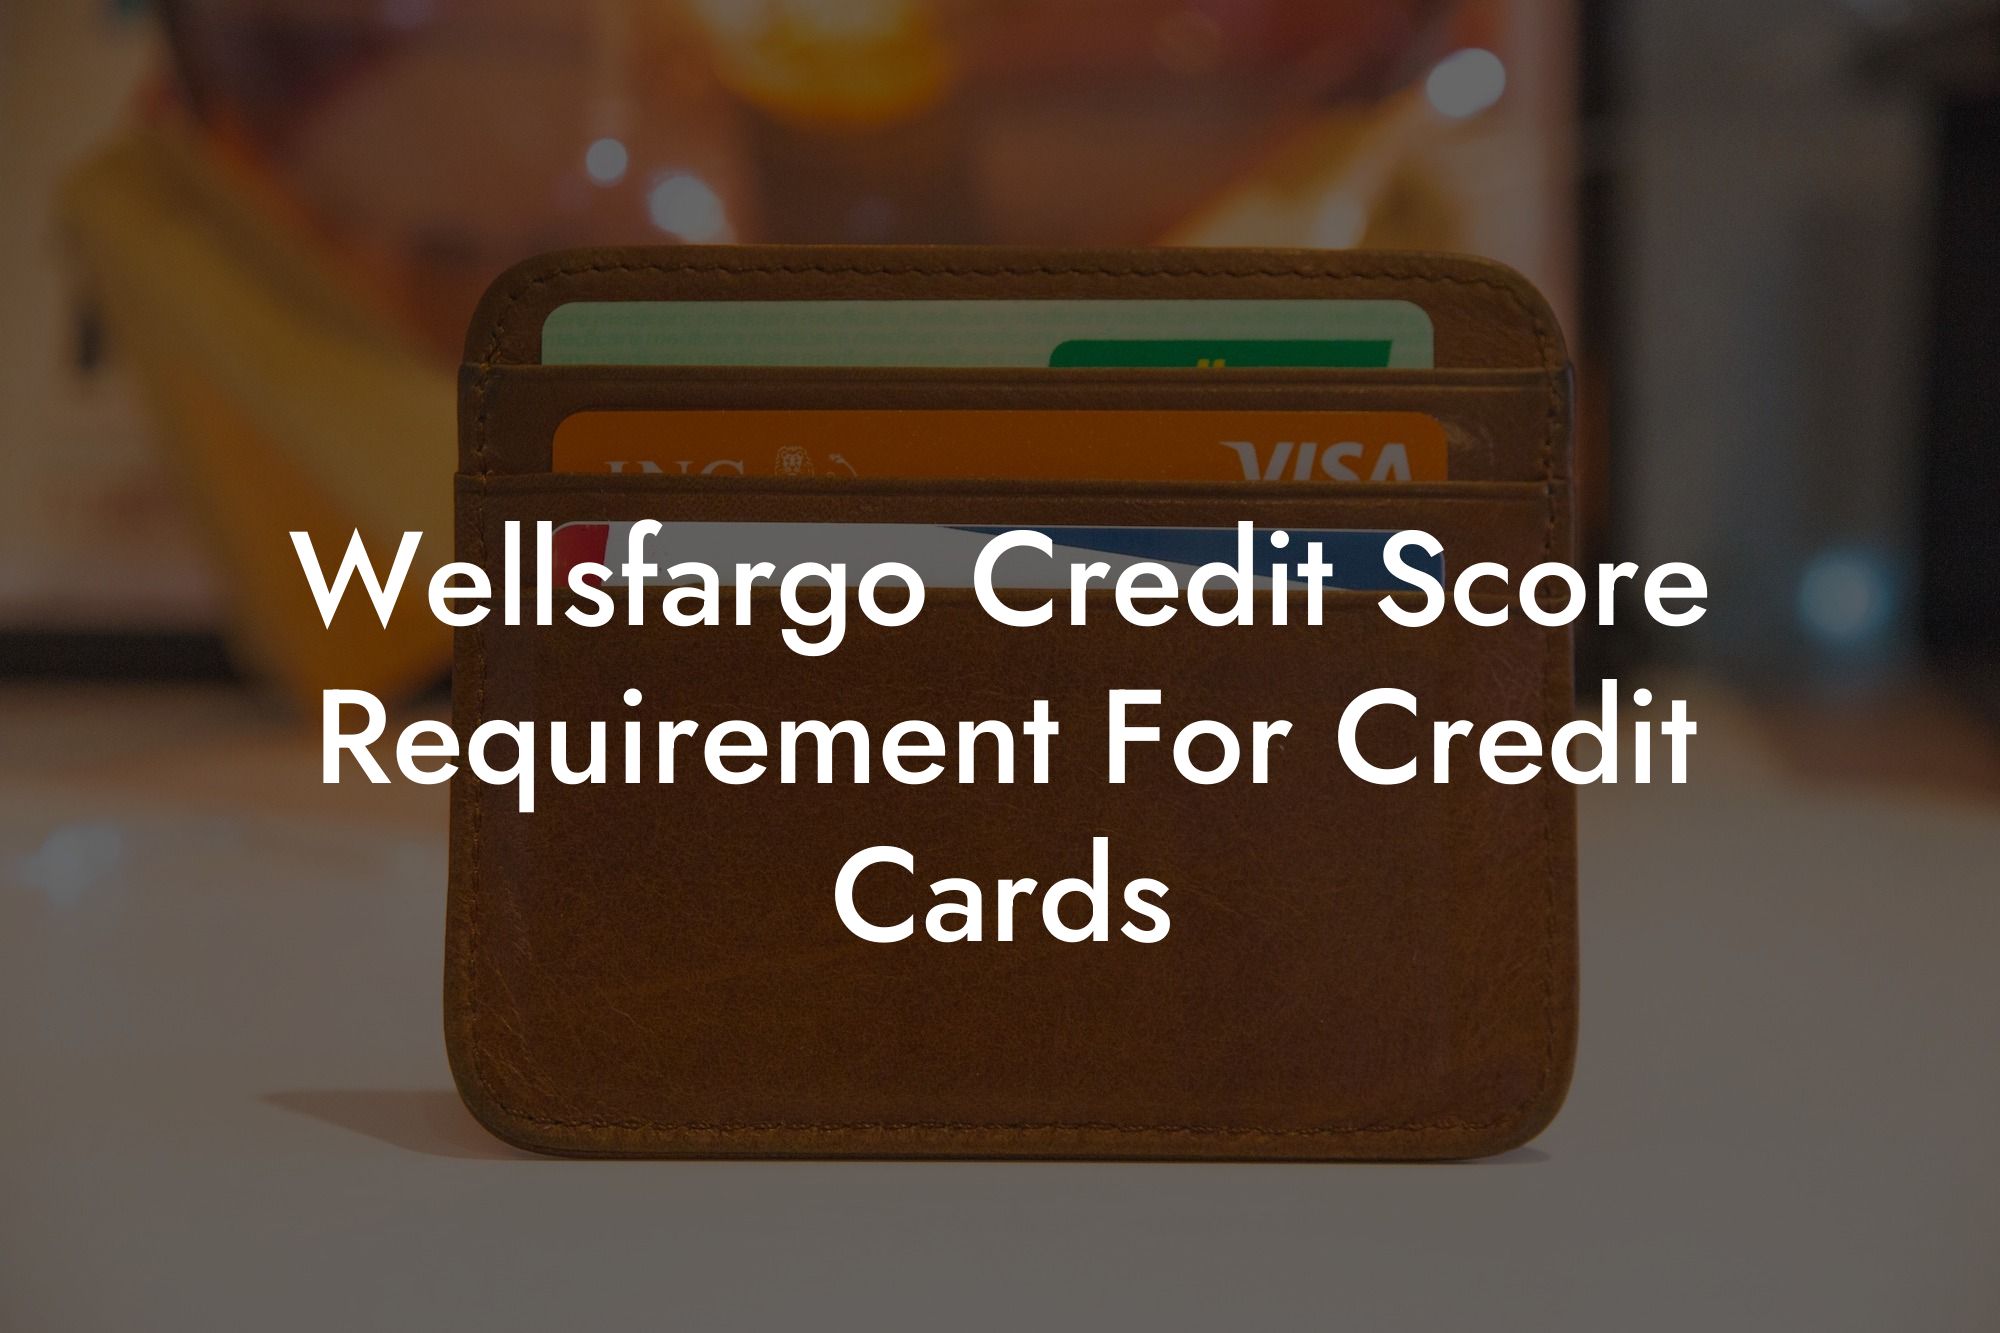 Wellsfargo Credit Score Requirement For Credit Cards